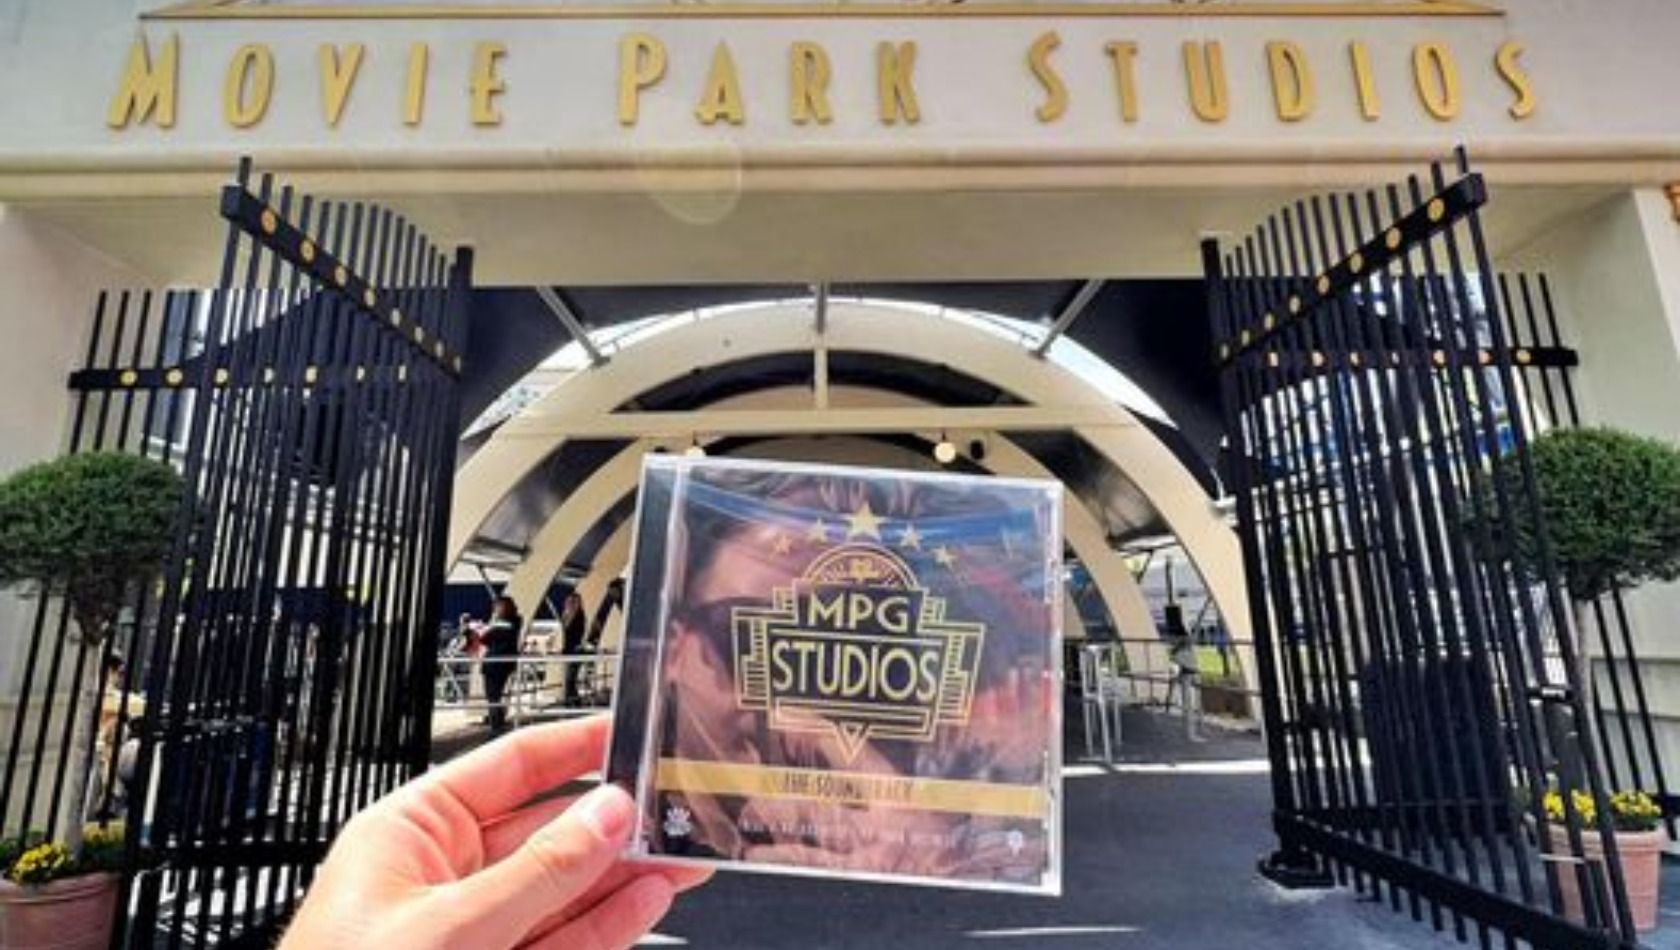 Die Soundtrack-CD zur Movie Park Studio Tour im Movie Park Germany